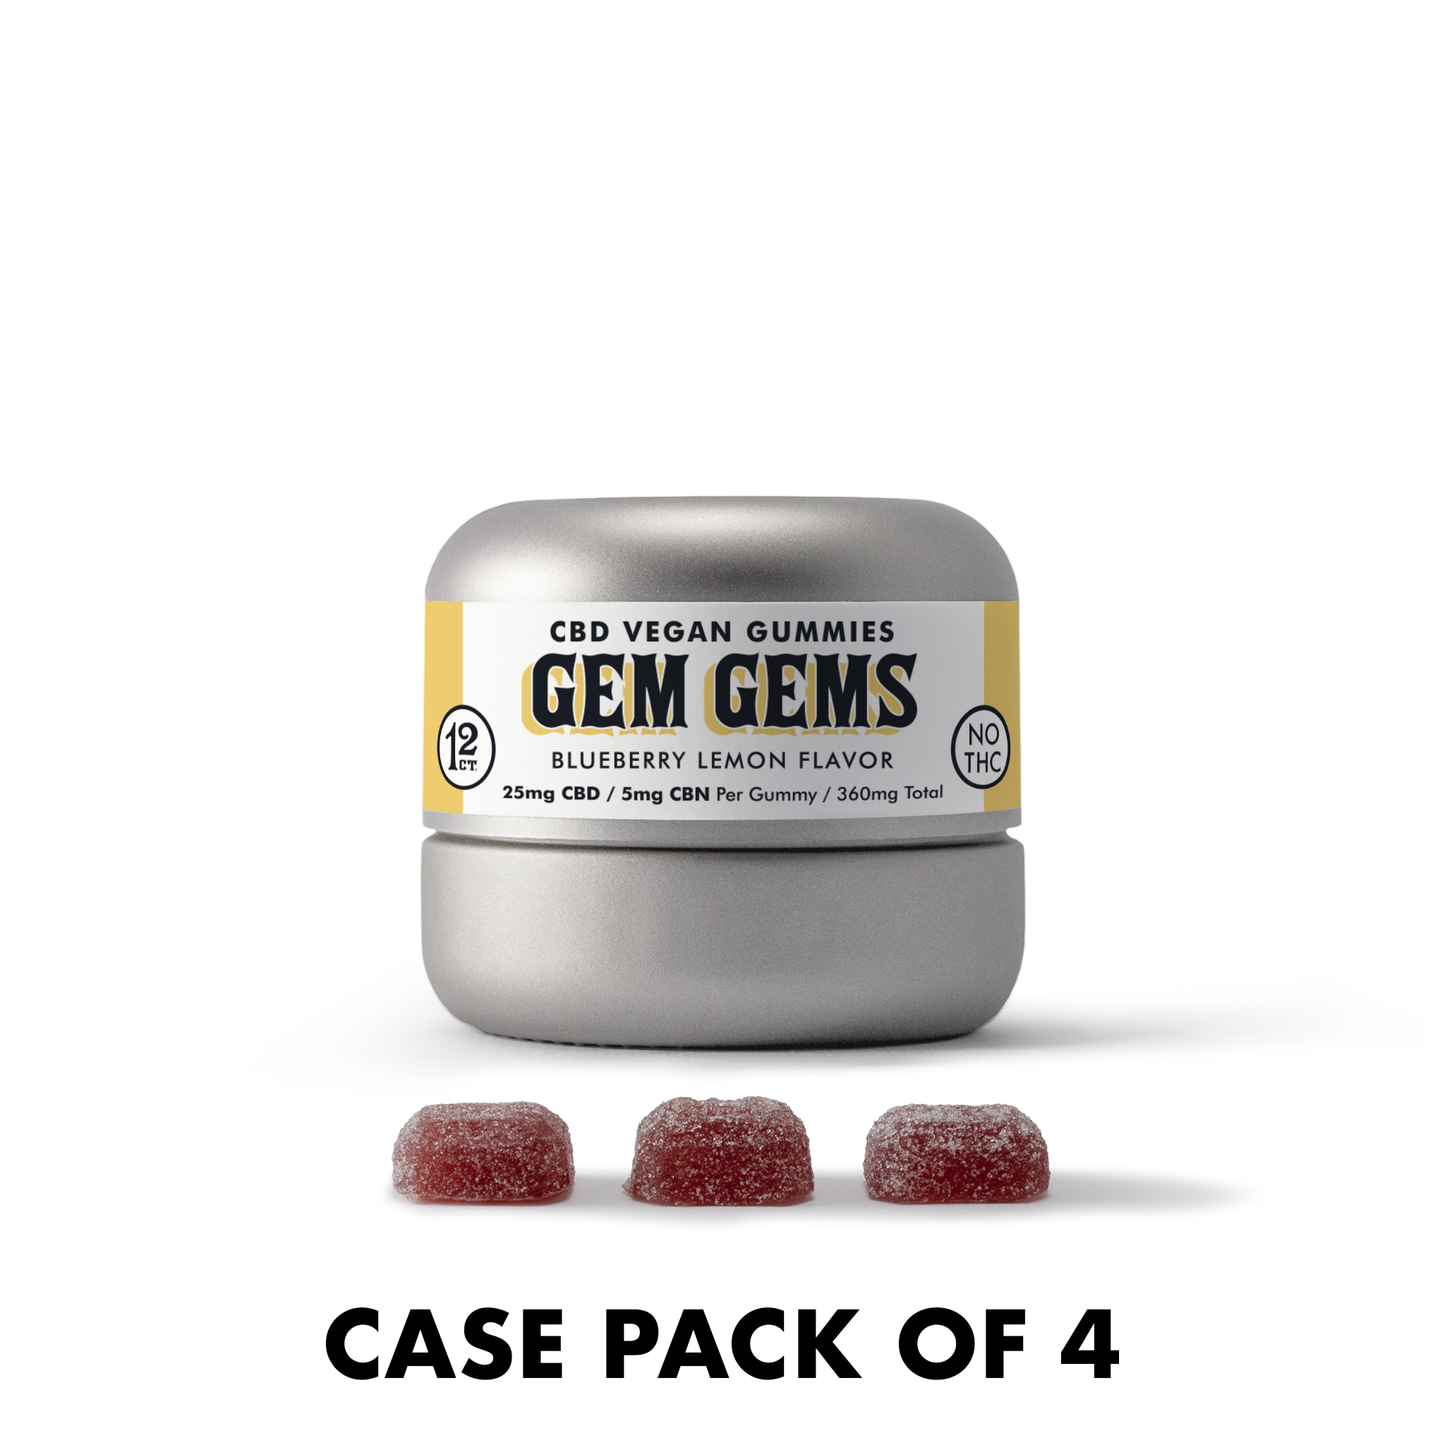 GEM GEMS - 12ct 25mg CBD / 5mg CBN Blueberry Lemon Flavor (Case pack of 4)